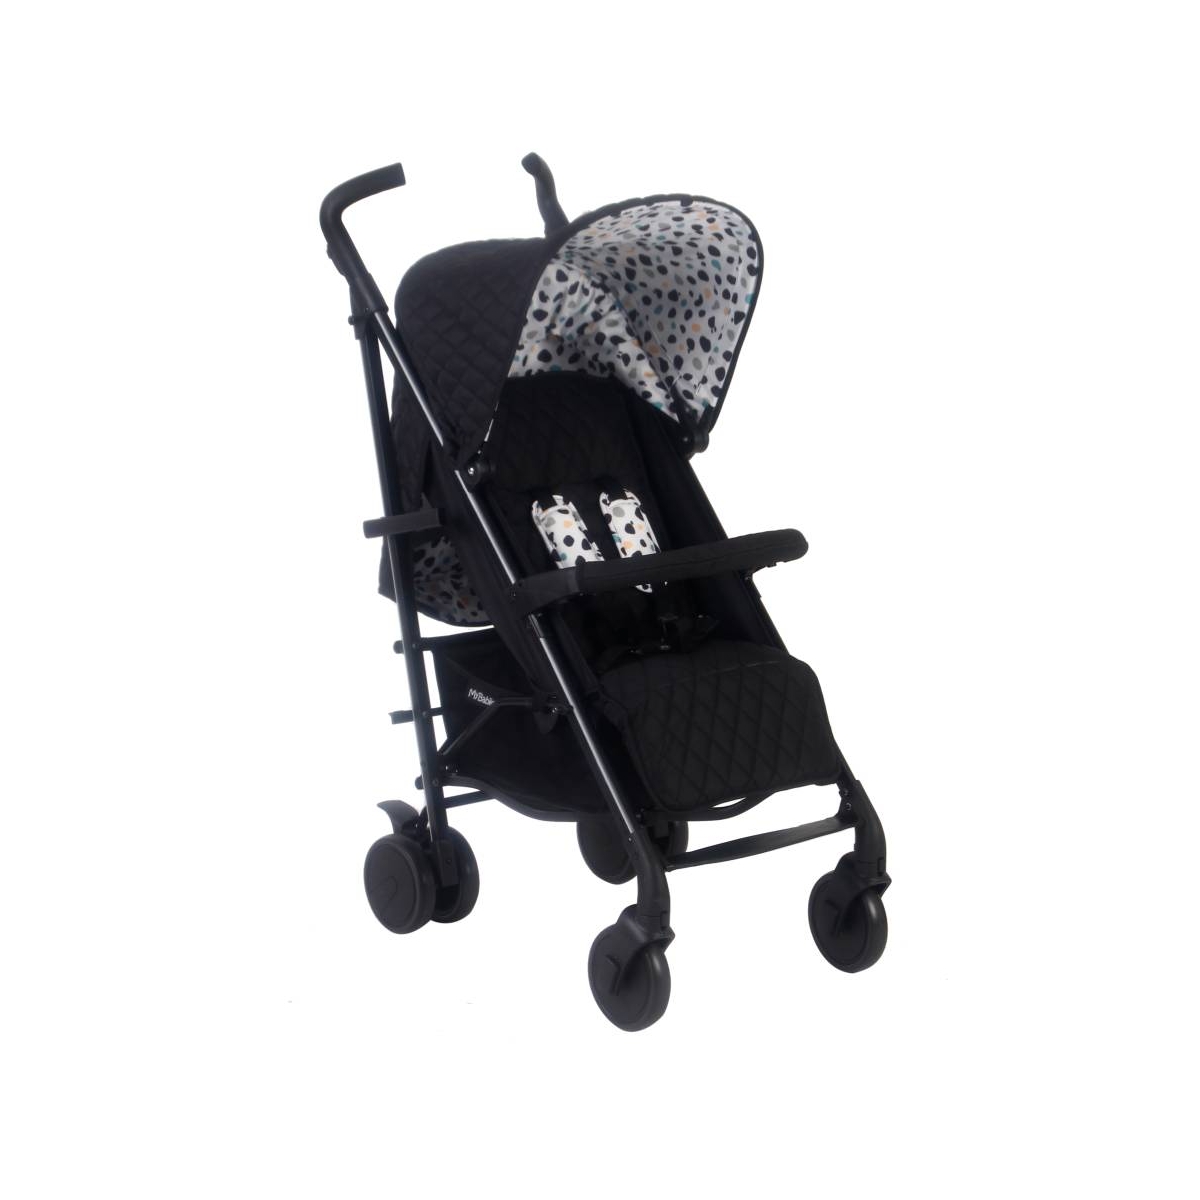 My Babiie MB52 Save the Children Stroller